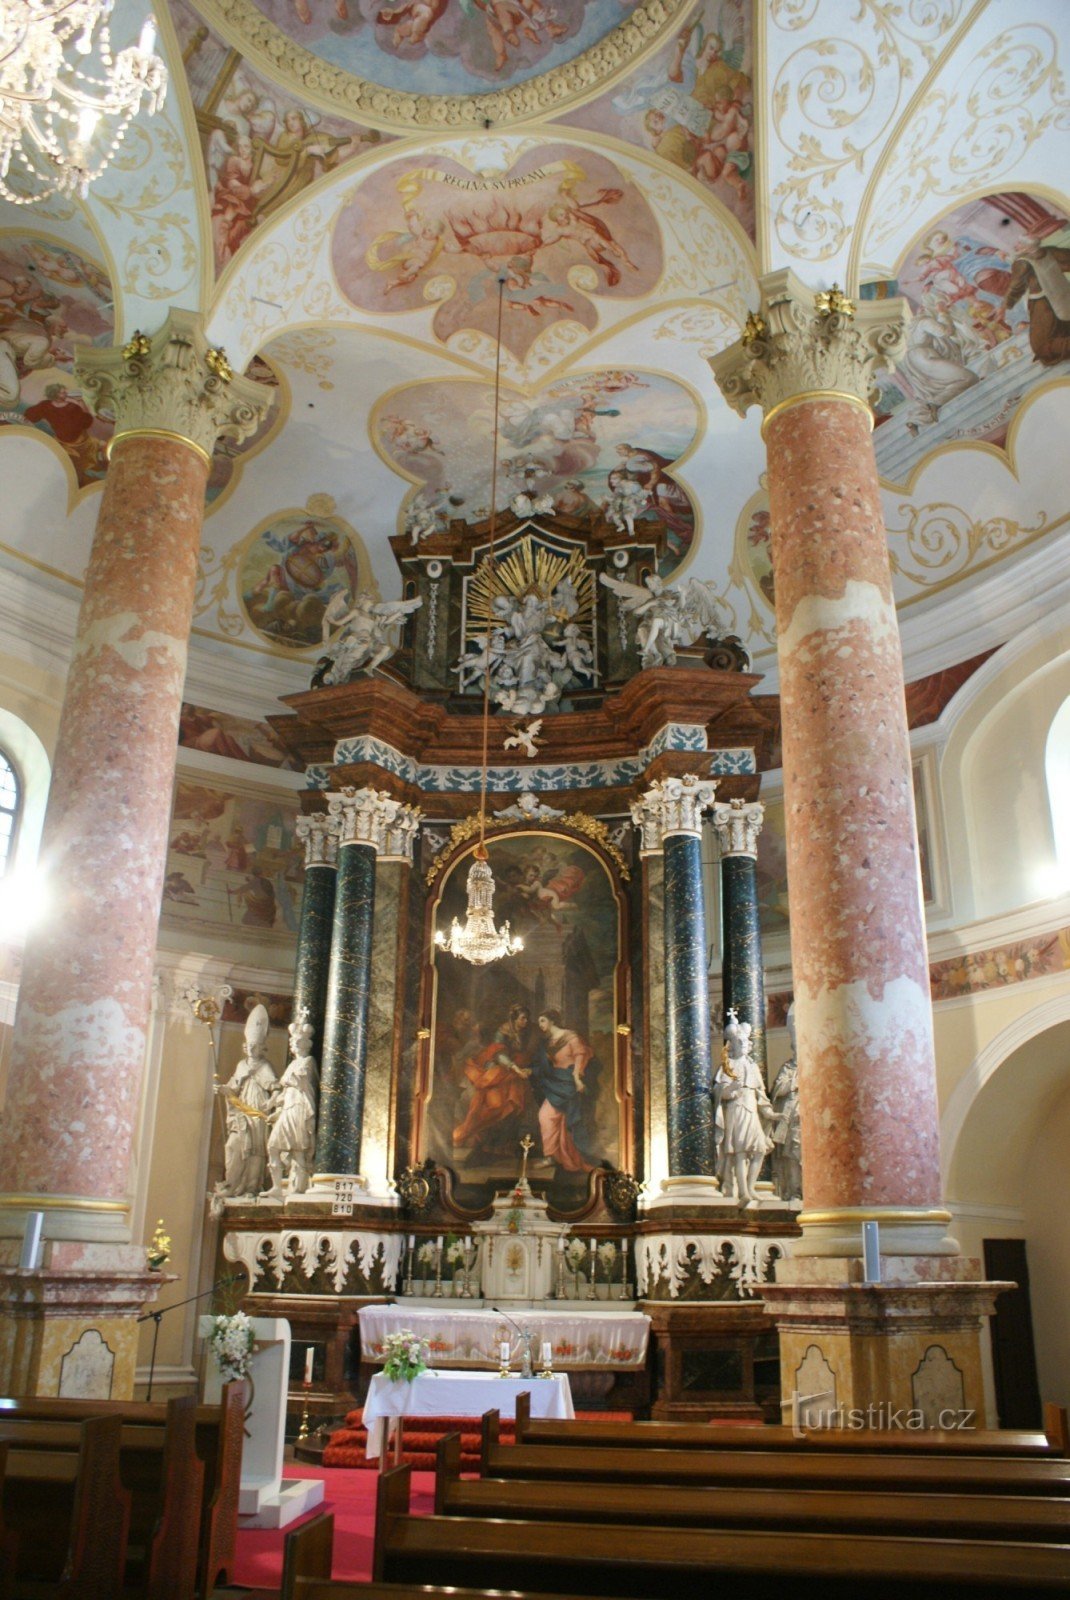 Rýmařov - the main altar of the chapel in Lipky